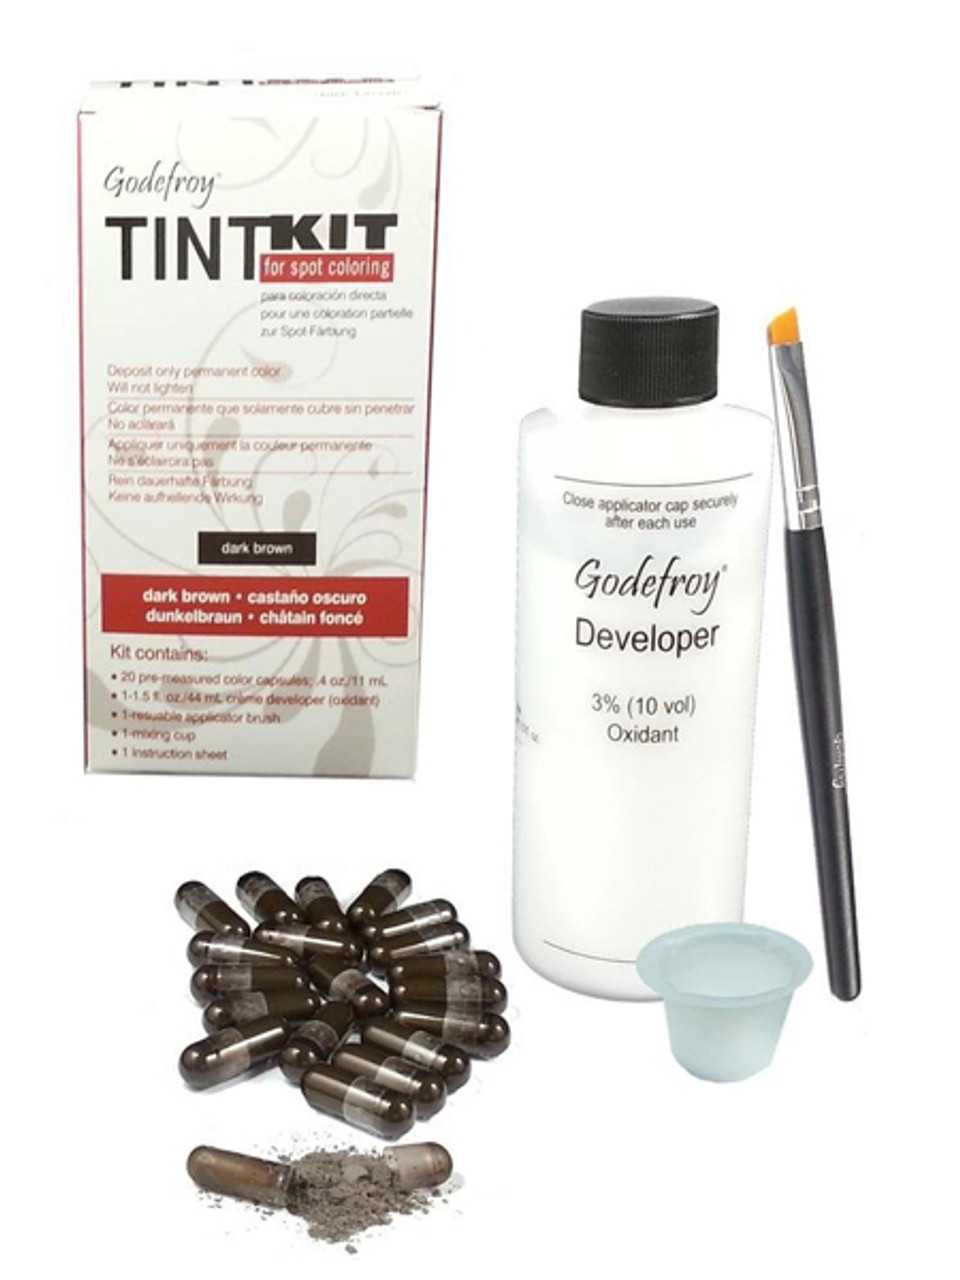 Godefroy Tint Kit Graphite 20 Application Kit